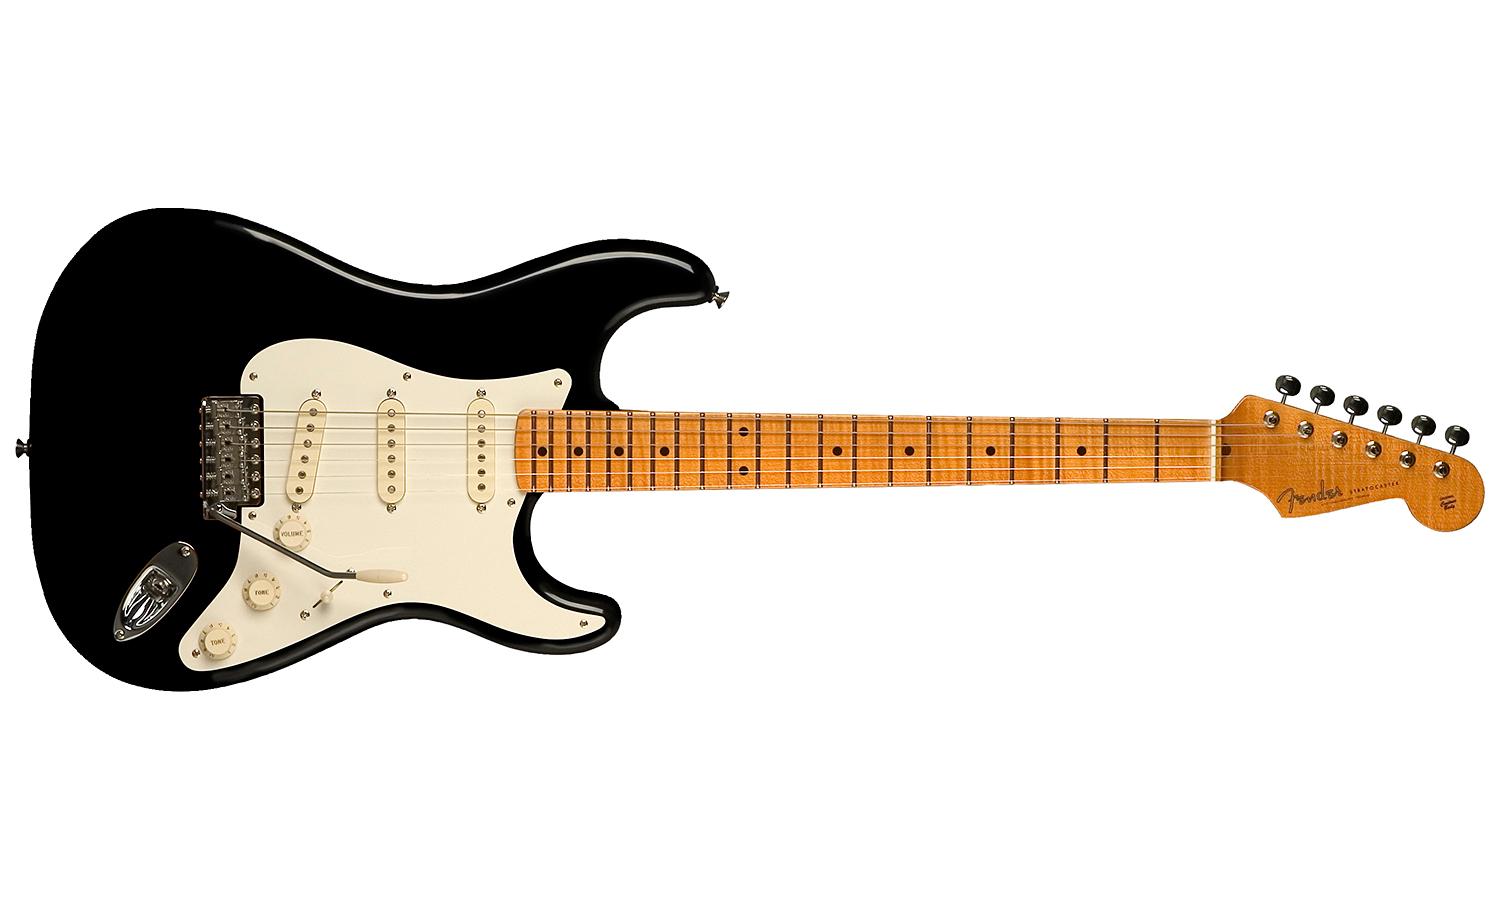 Fender Strat Eric Johnson Usa Signature Sss Mn - Black - E-Gitarre in Str-Form - Variation 1